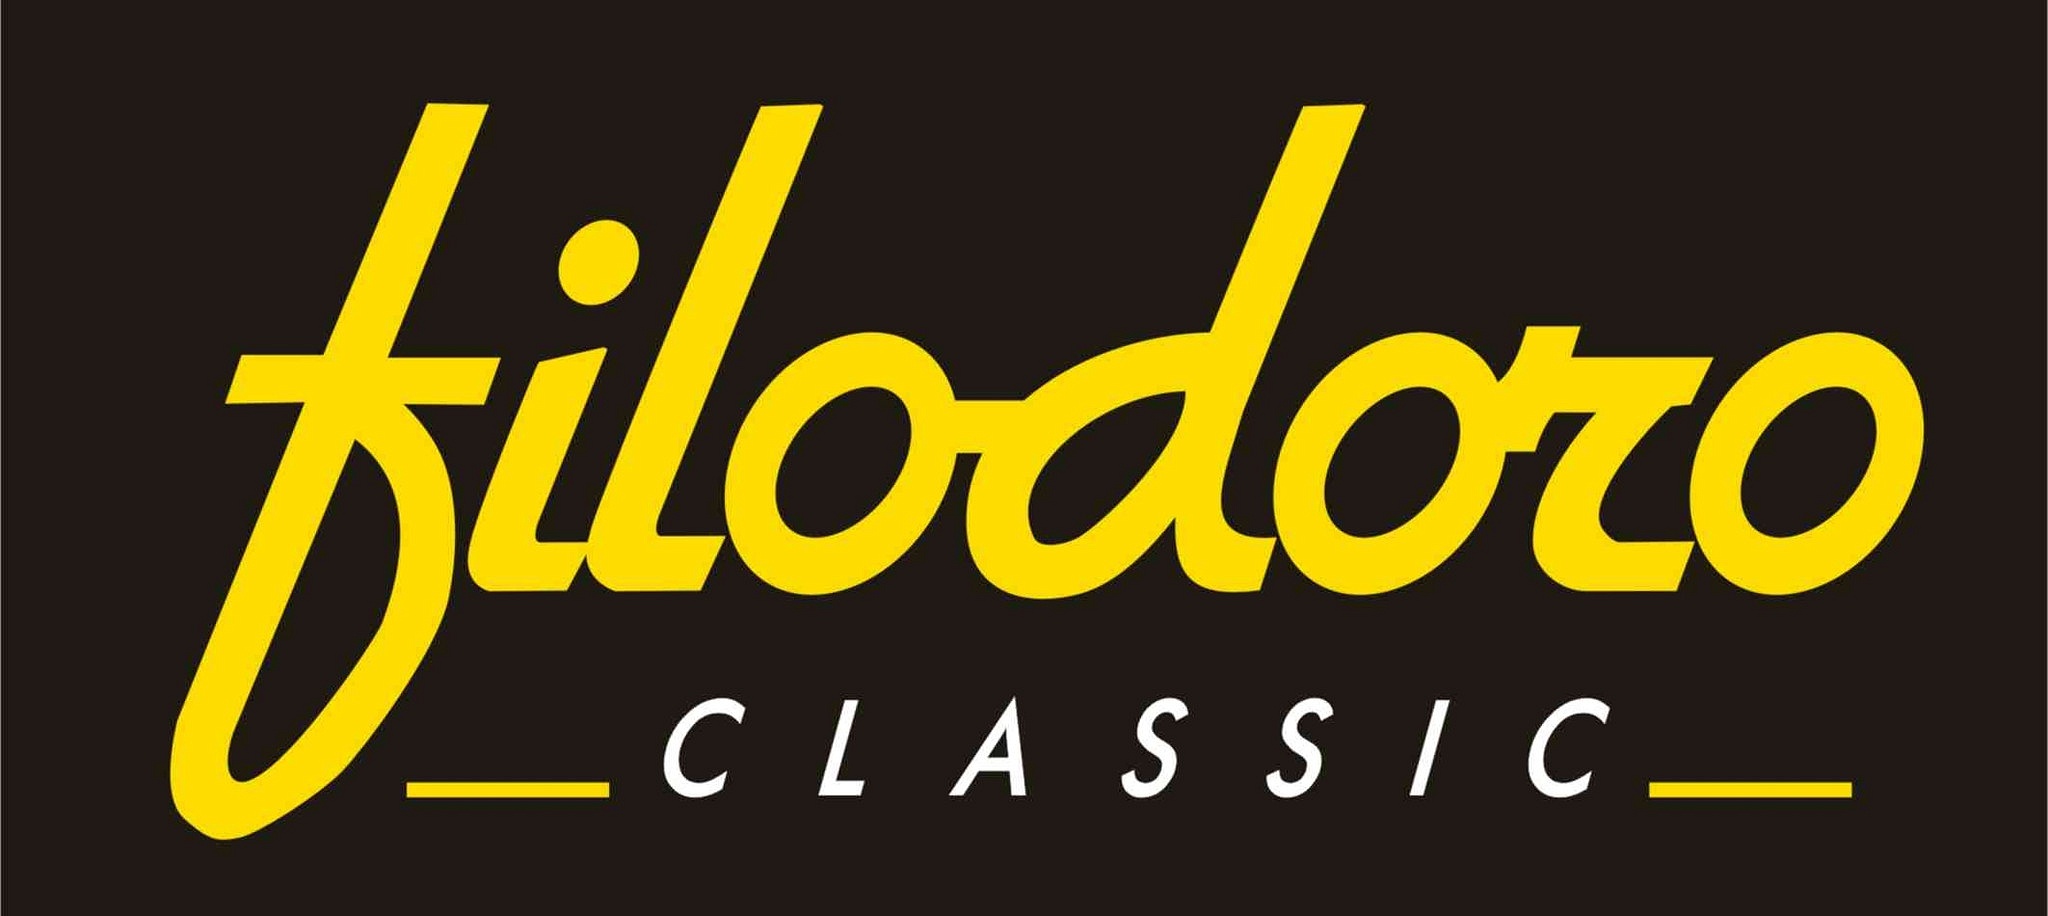 Filodoro Classic